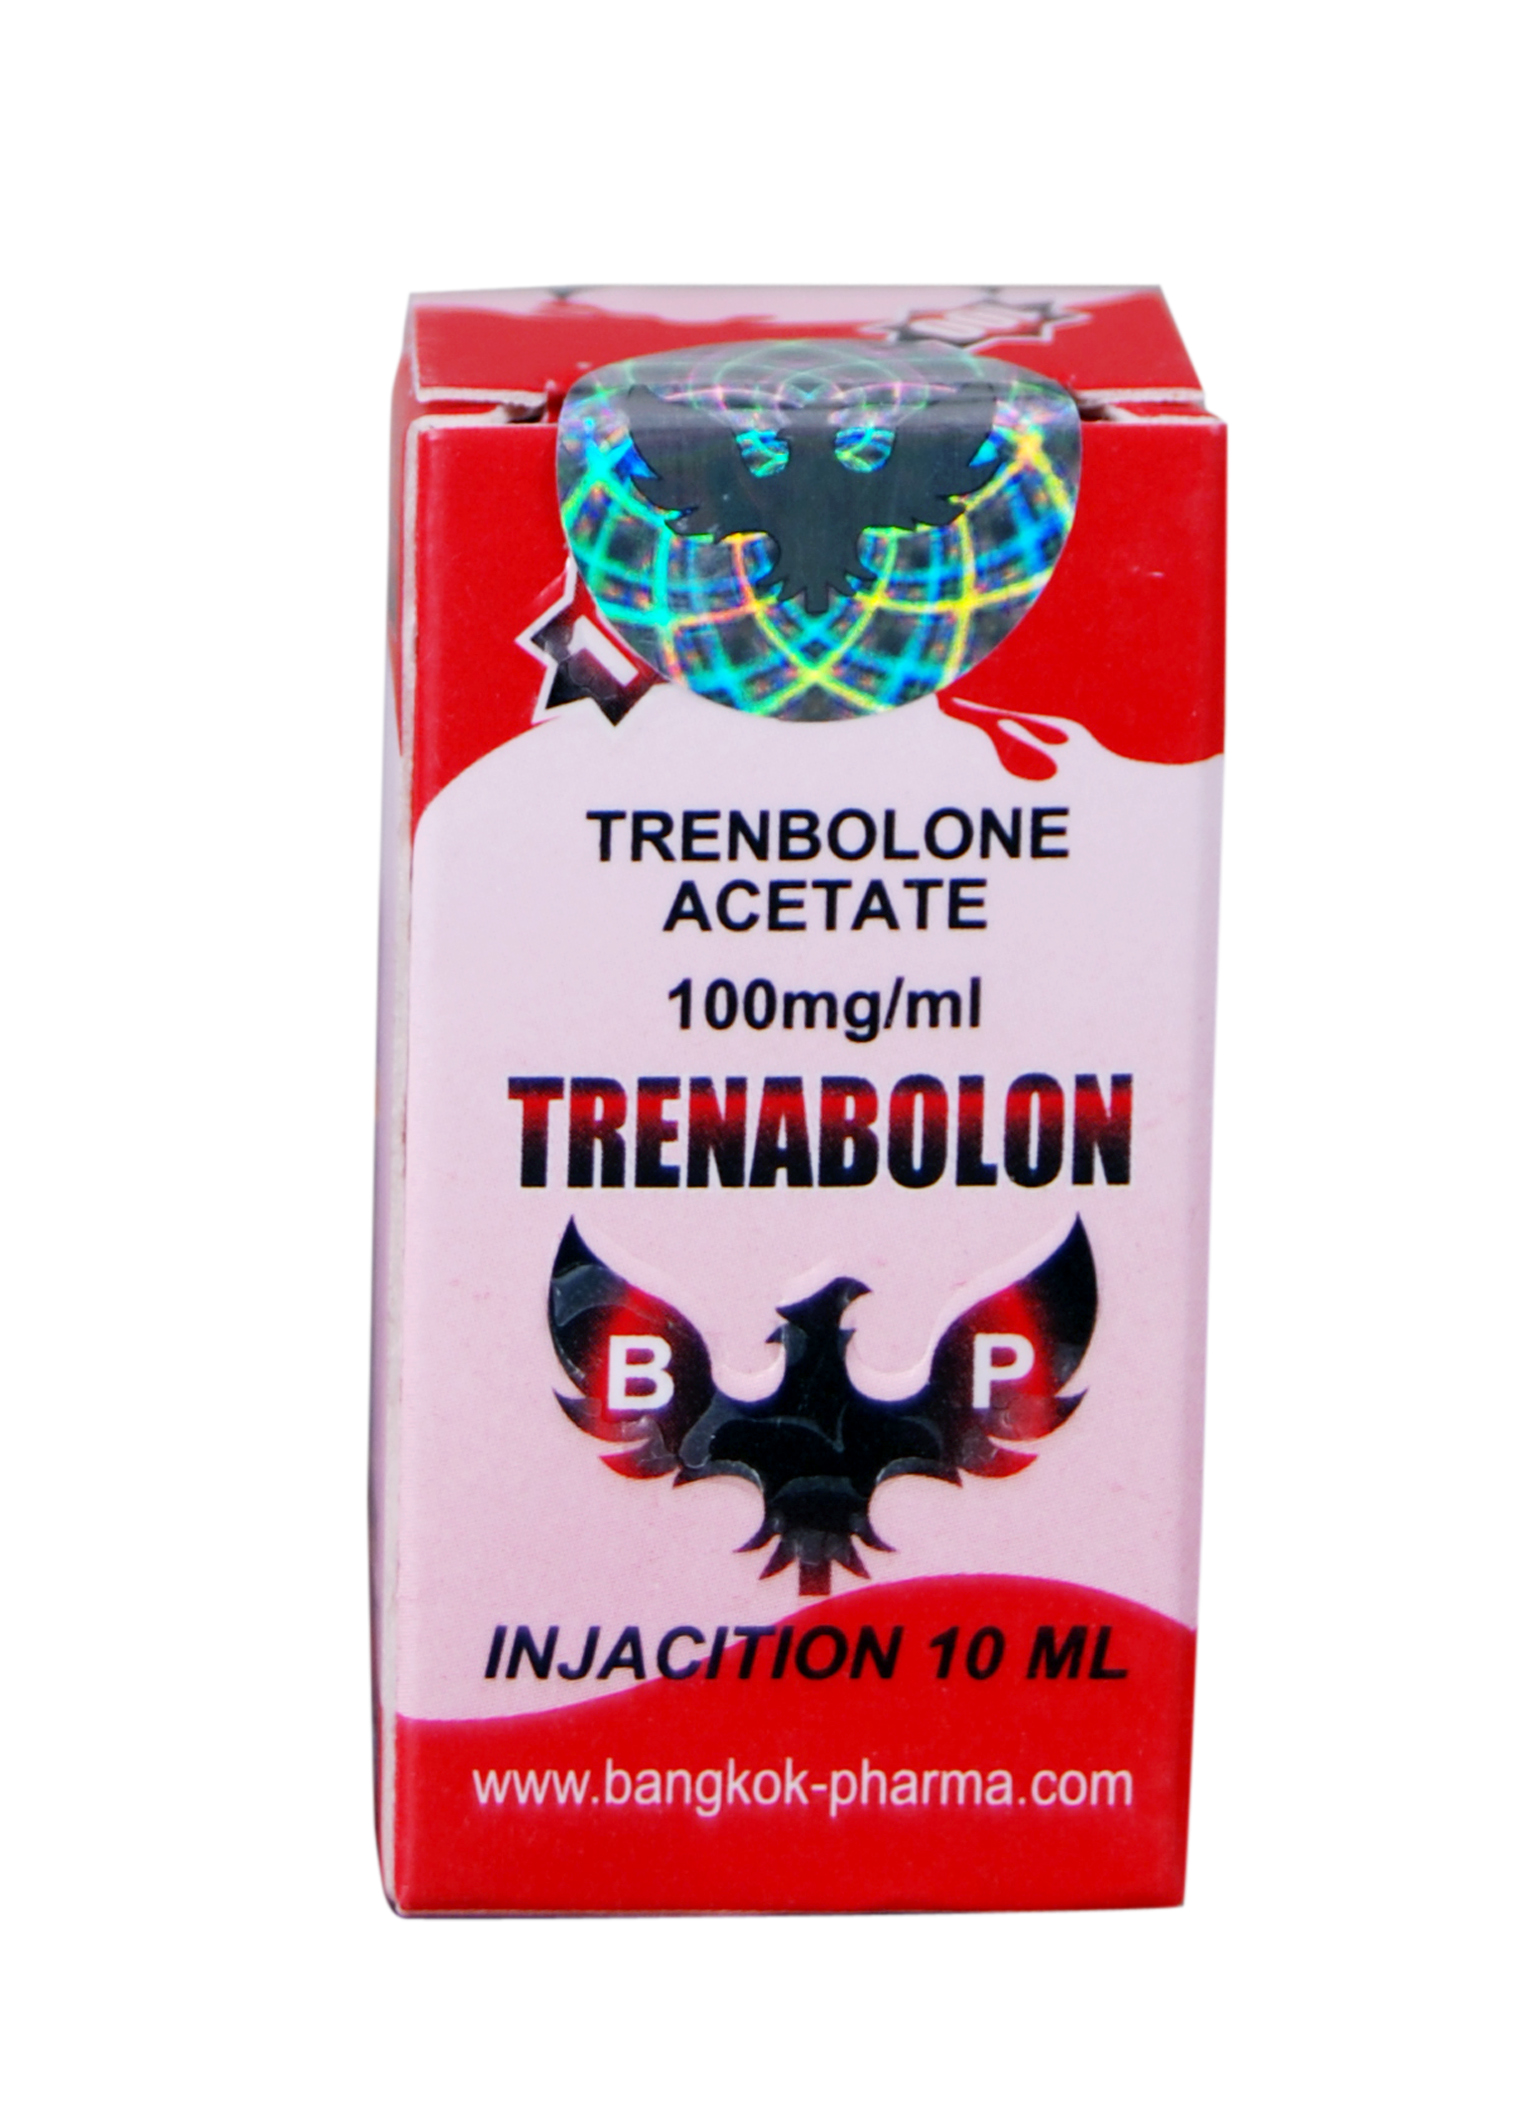 Trenbolone 100